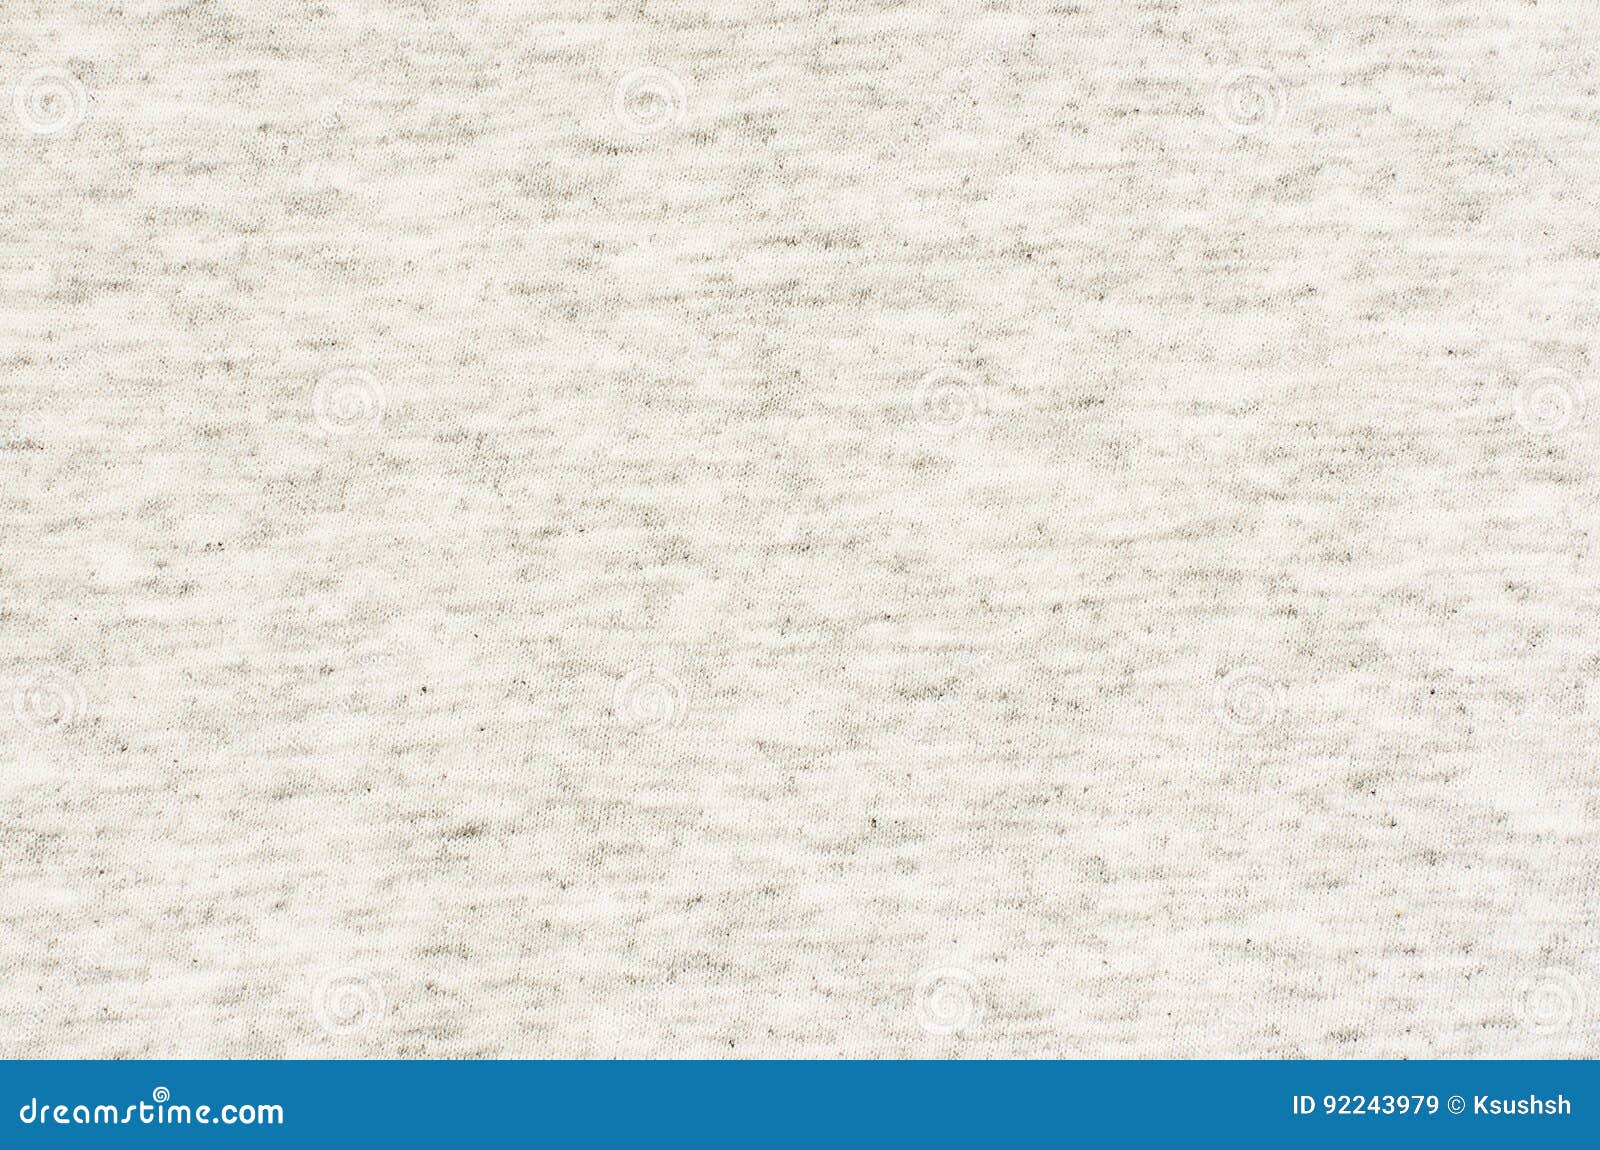 Jersey Fabric Background Stock Photography | CartoonDealer.com #73701800